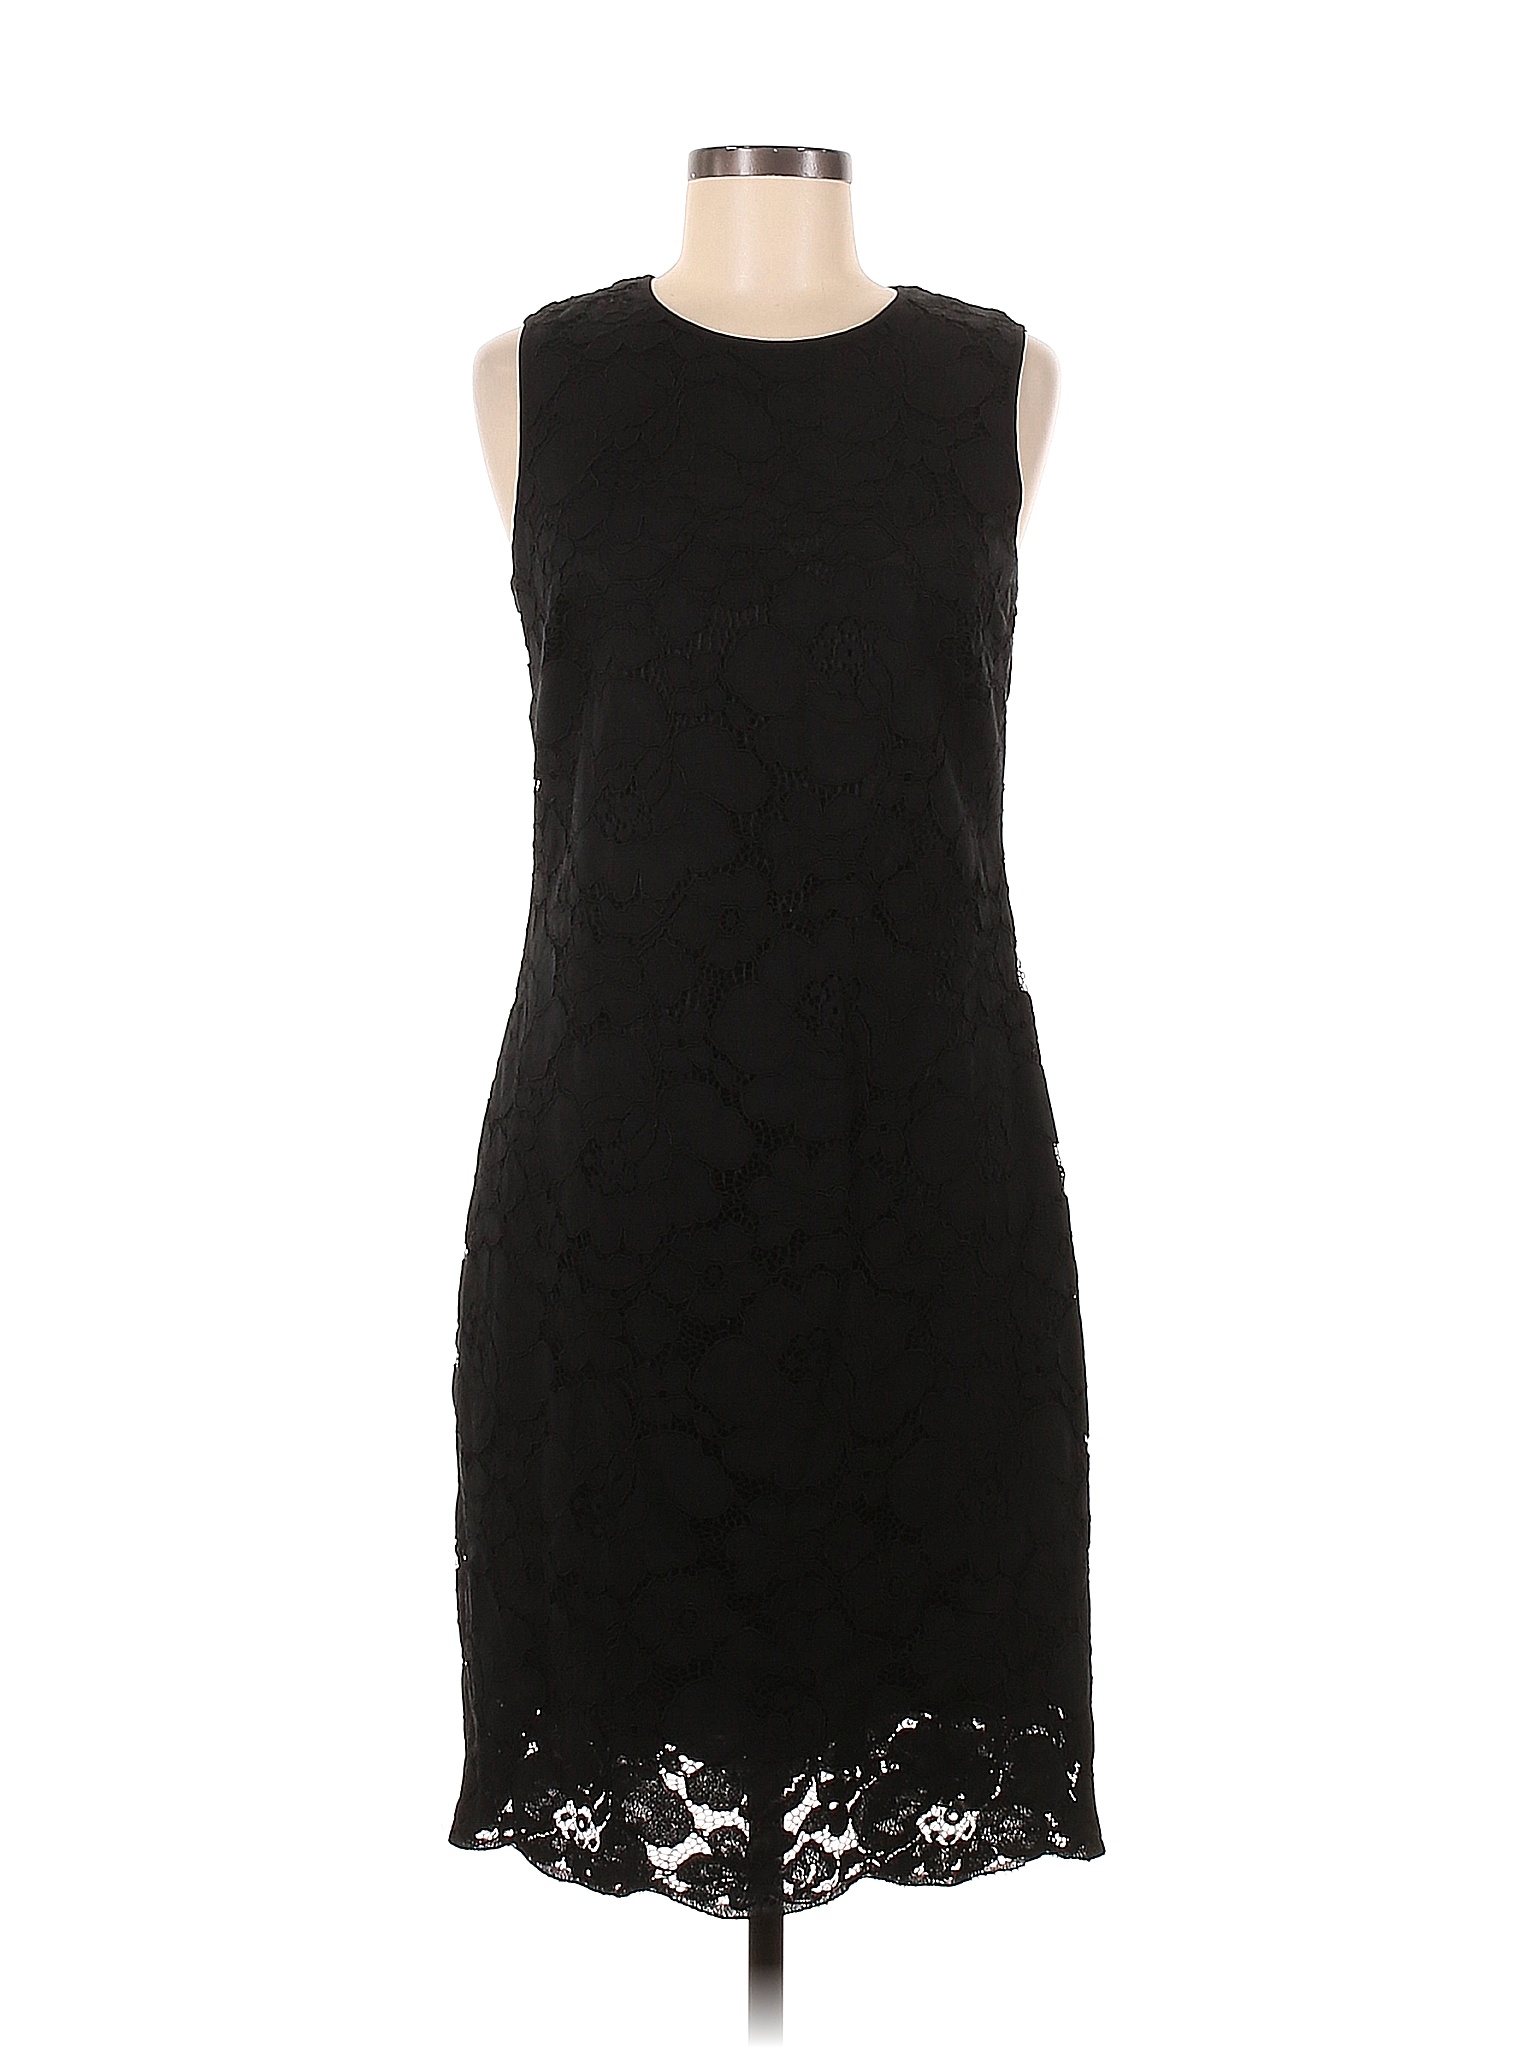 Karl Lagerfeld Solid Black Cocktail Dress Size 6 - 88% off | thredUP